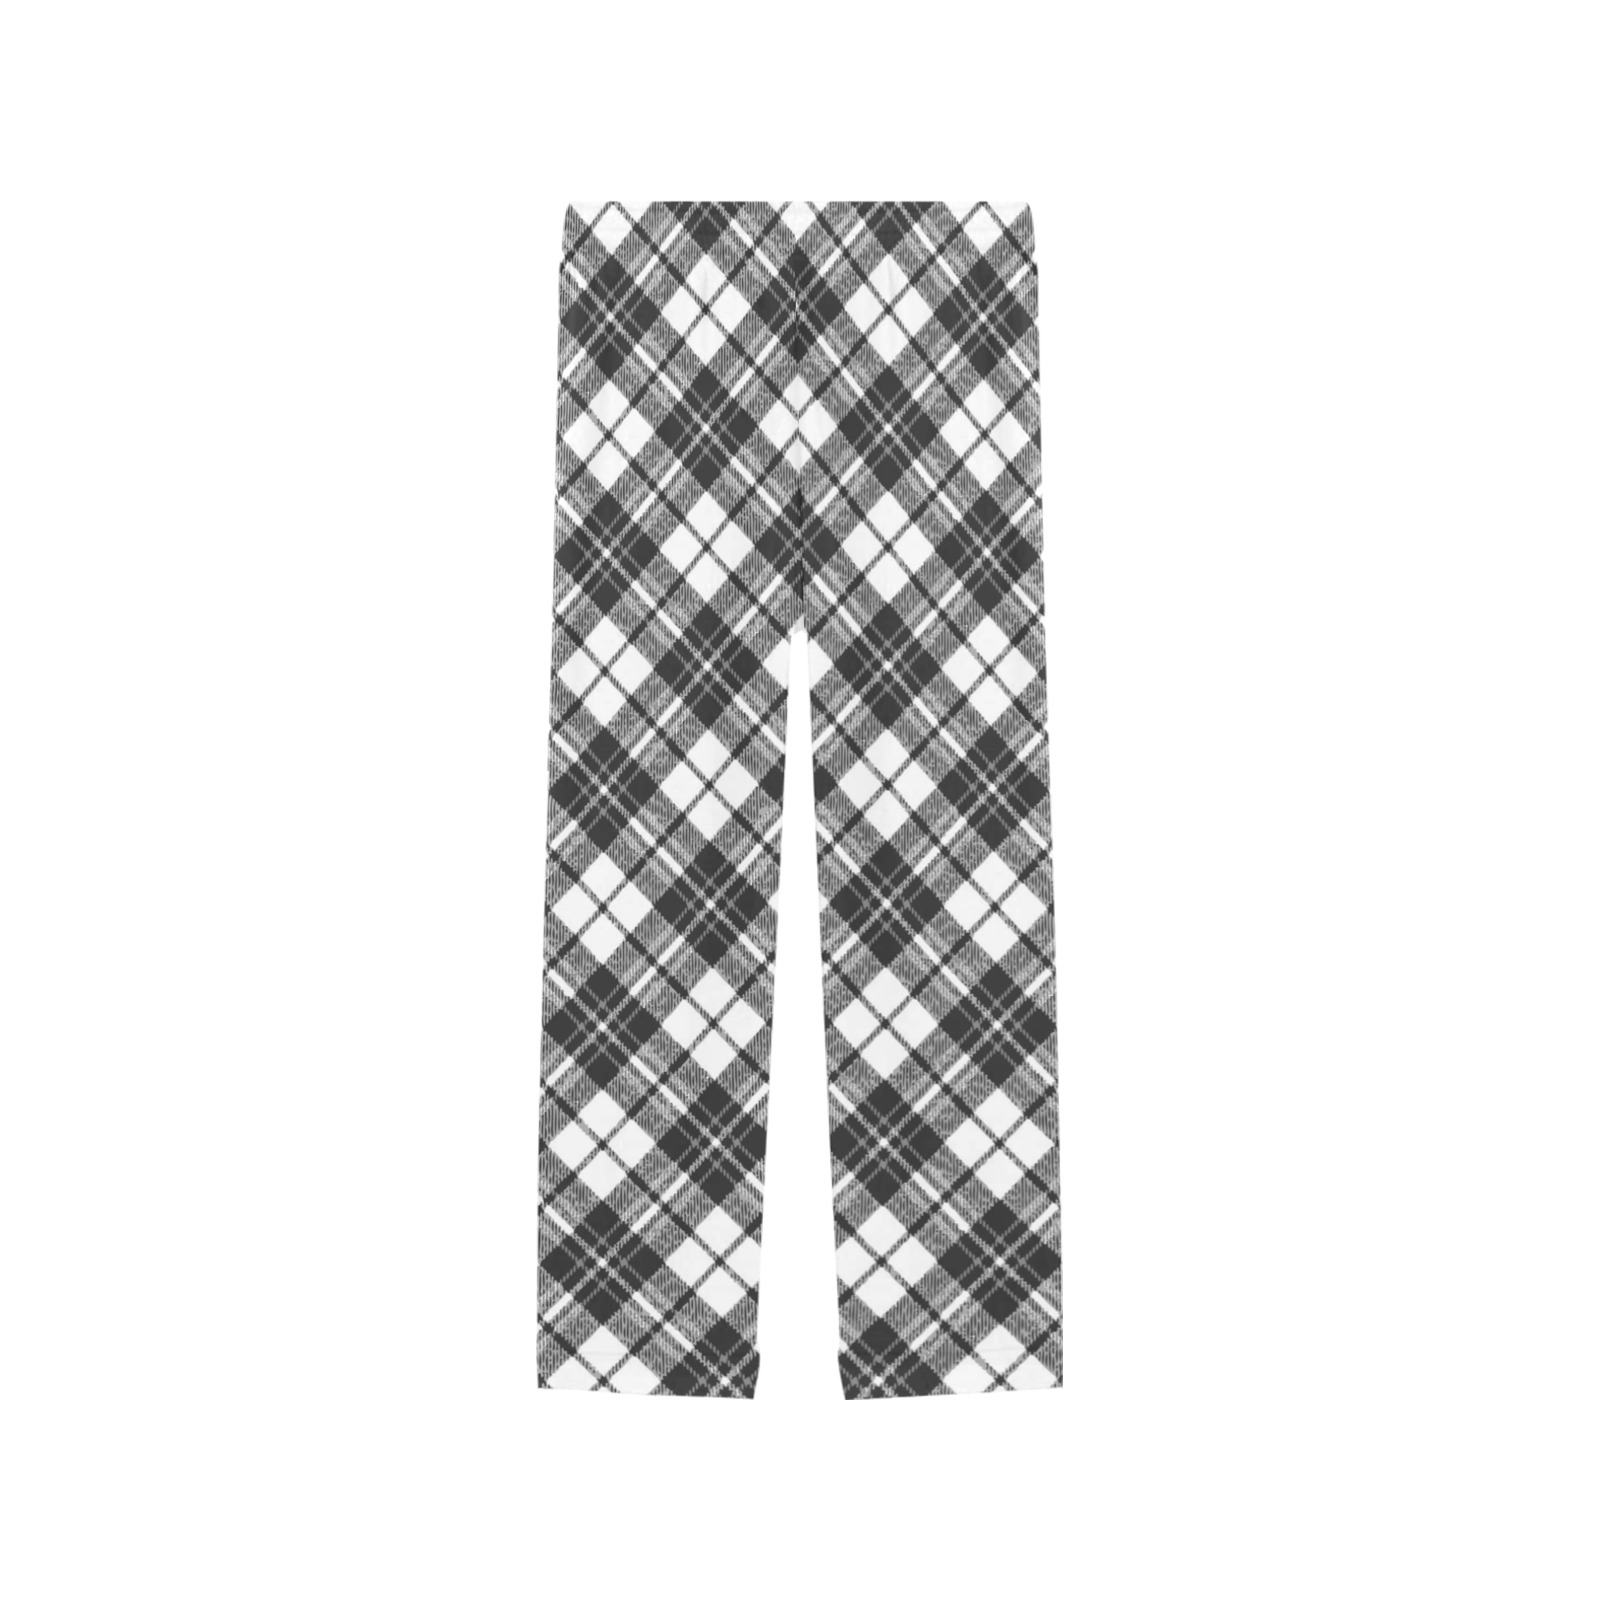 Tartan black white pattern holidays Christmas xmas elegant lines geometric cool fun classic elegance Women's Pajama Trousers